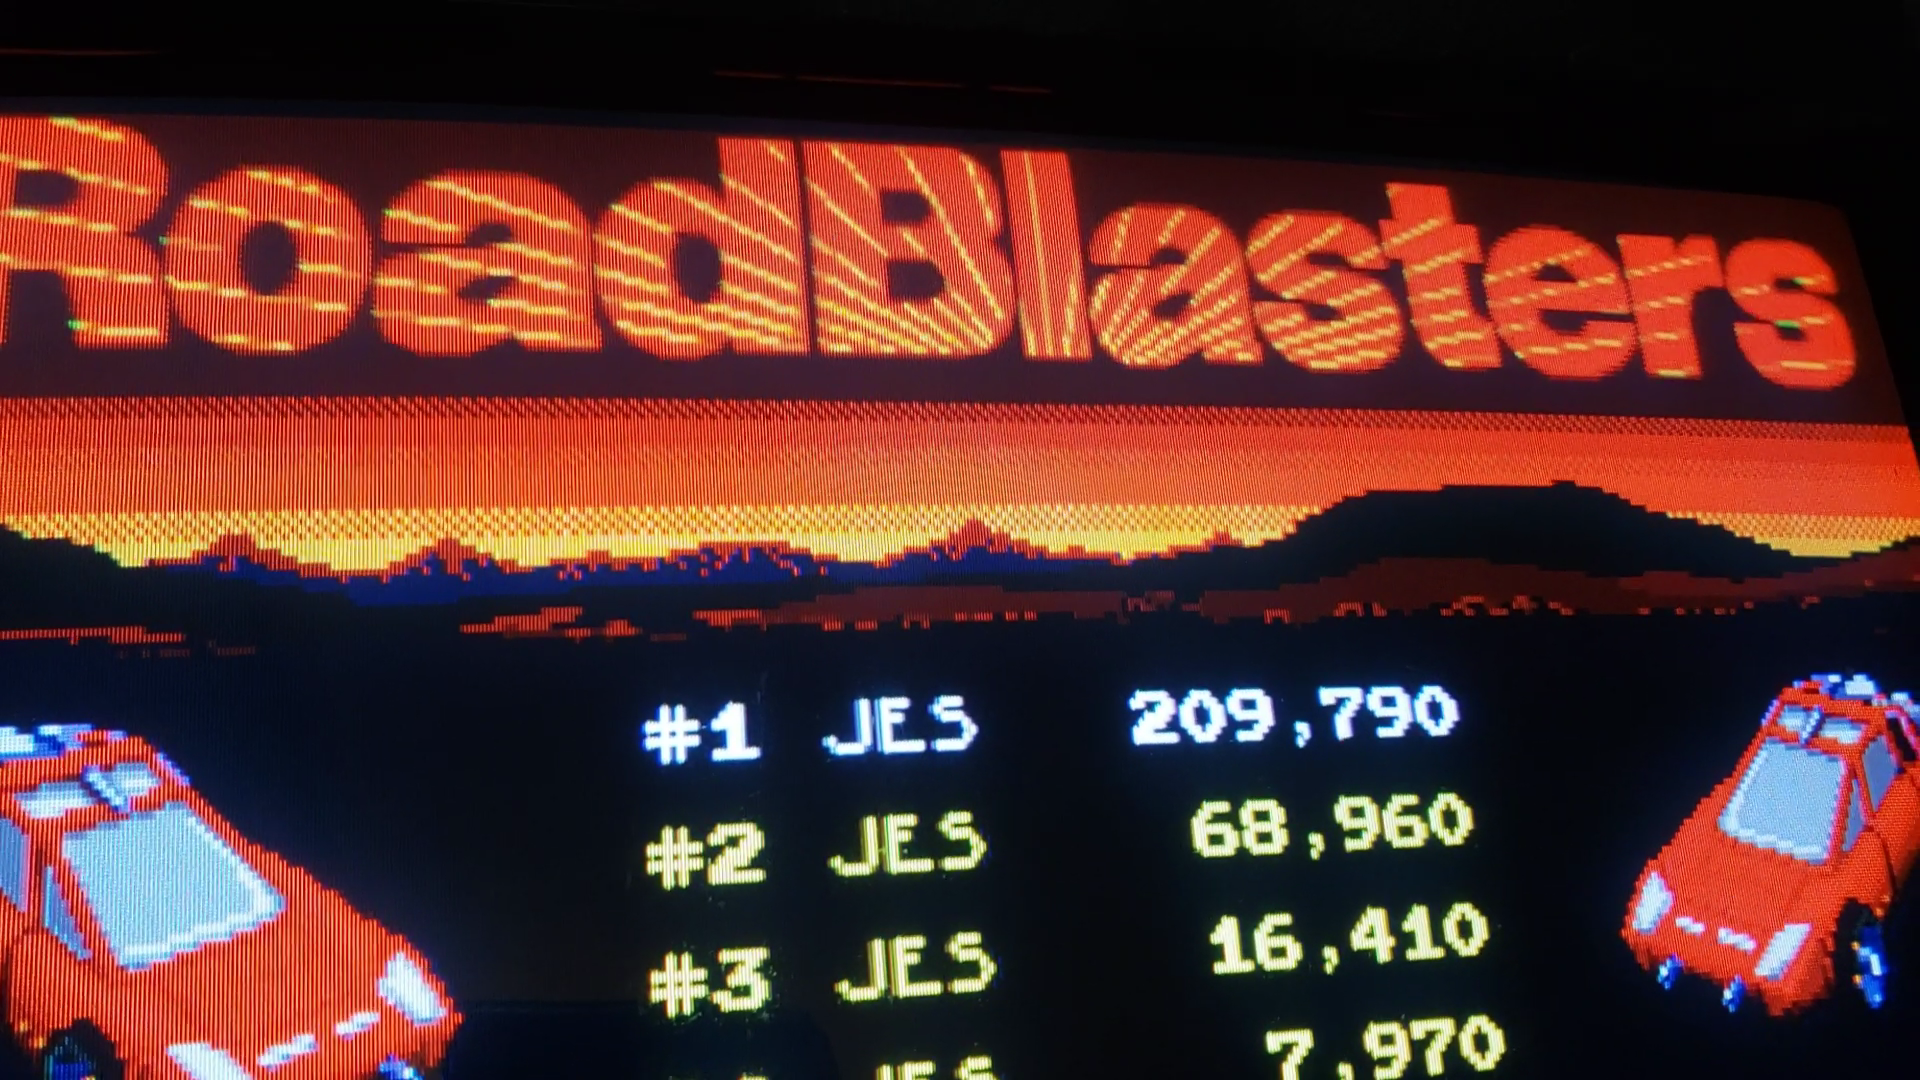 RoadBlasters [Level 11 Start] 209,790 points